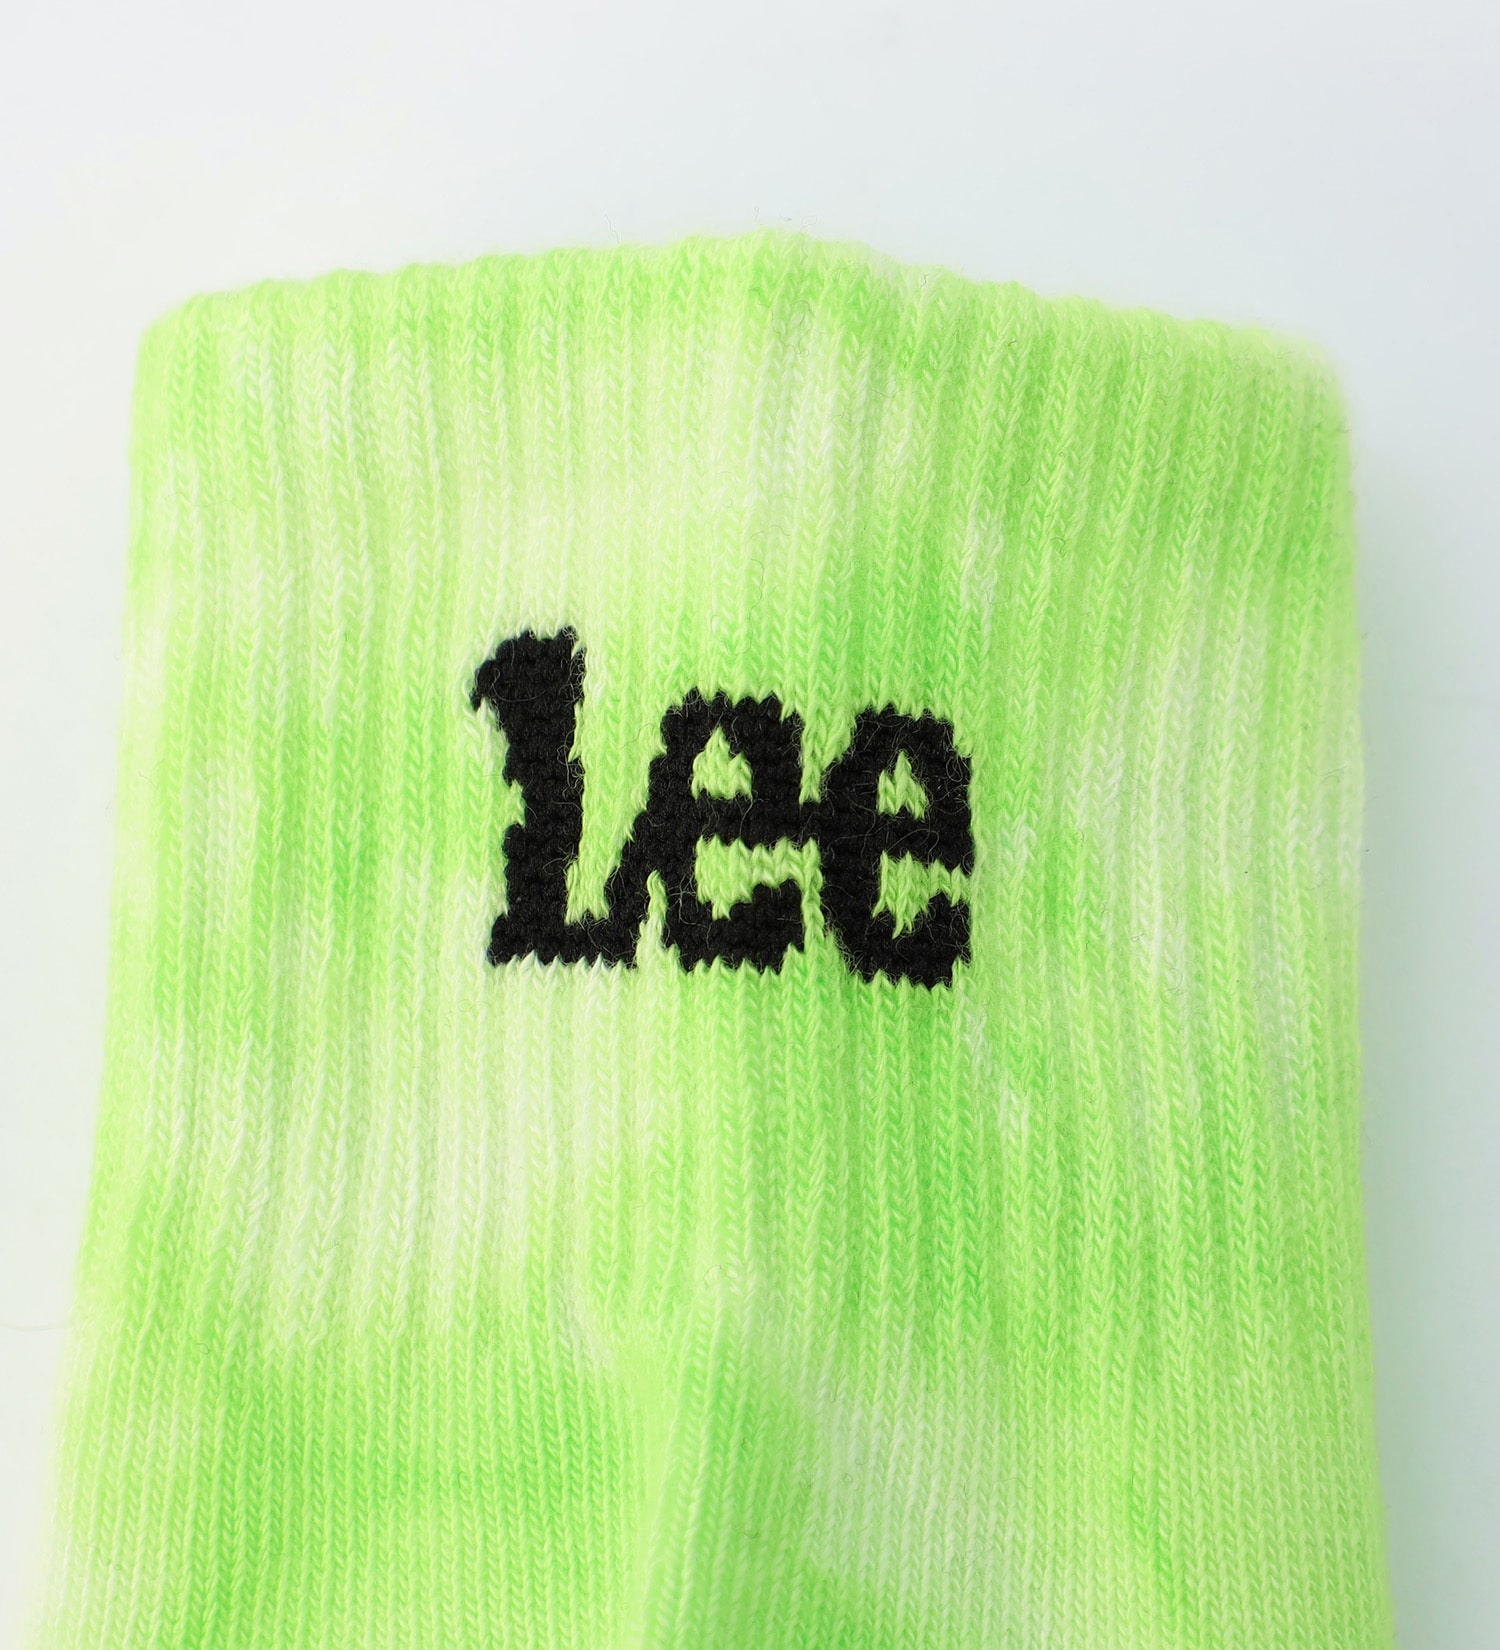 Lee(リー)のLee ウィメンズソックス 2足組 タイダイ|ファッション雑貨/靴下/レディース|その他1